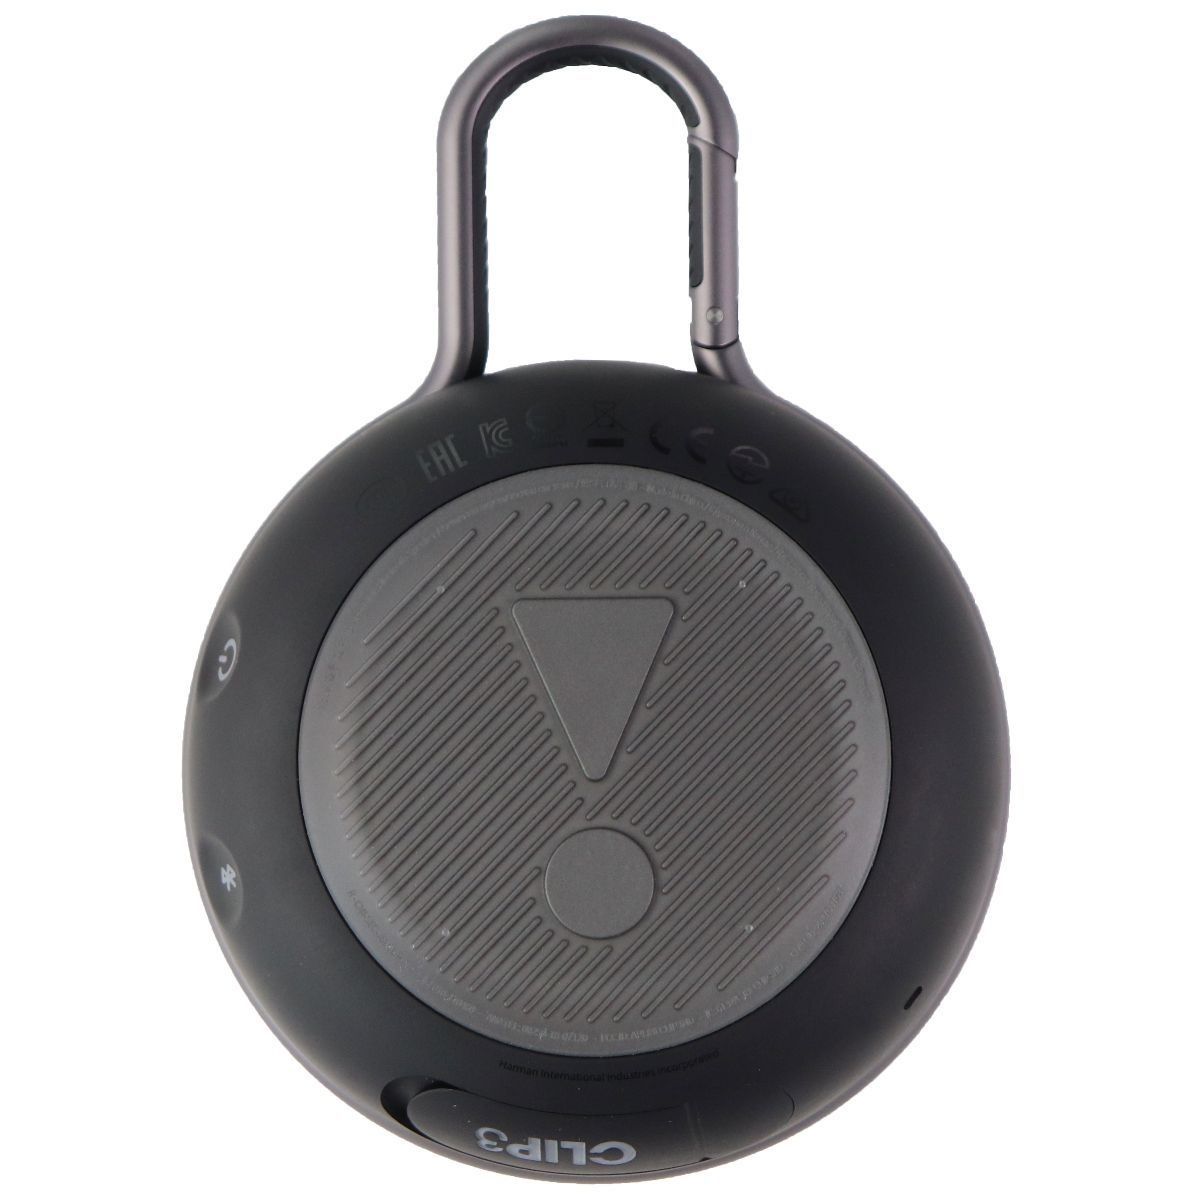 JBL Clip 3 Portable Waterproof Wireless Bluetooth Speaker - Black iPod, Audio Player Accessories - Audio Docks & Mini Speakers JBL    - Simple Cell Bulk Wholesale Pricing - USA Seller